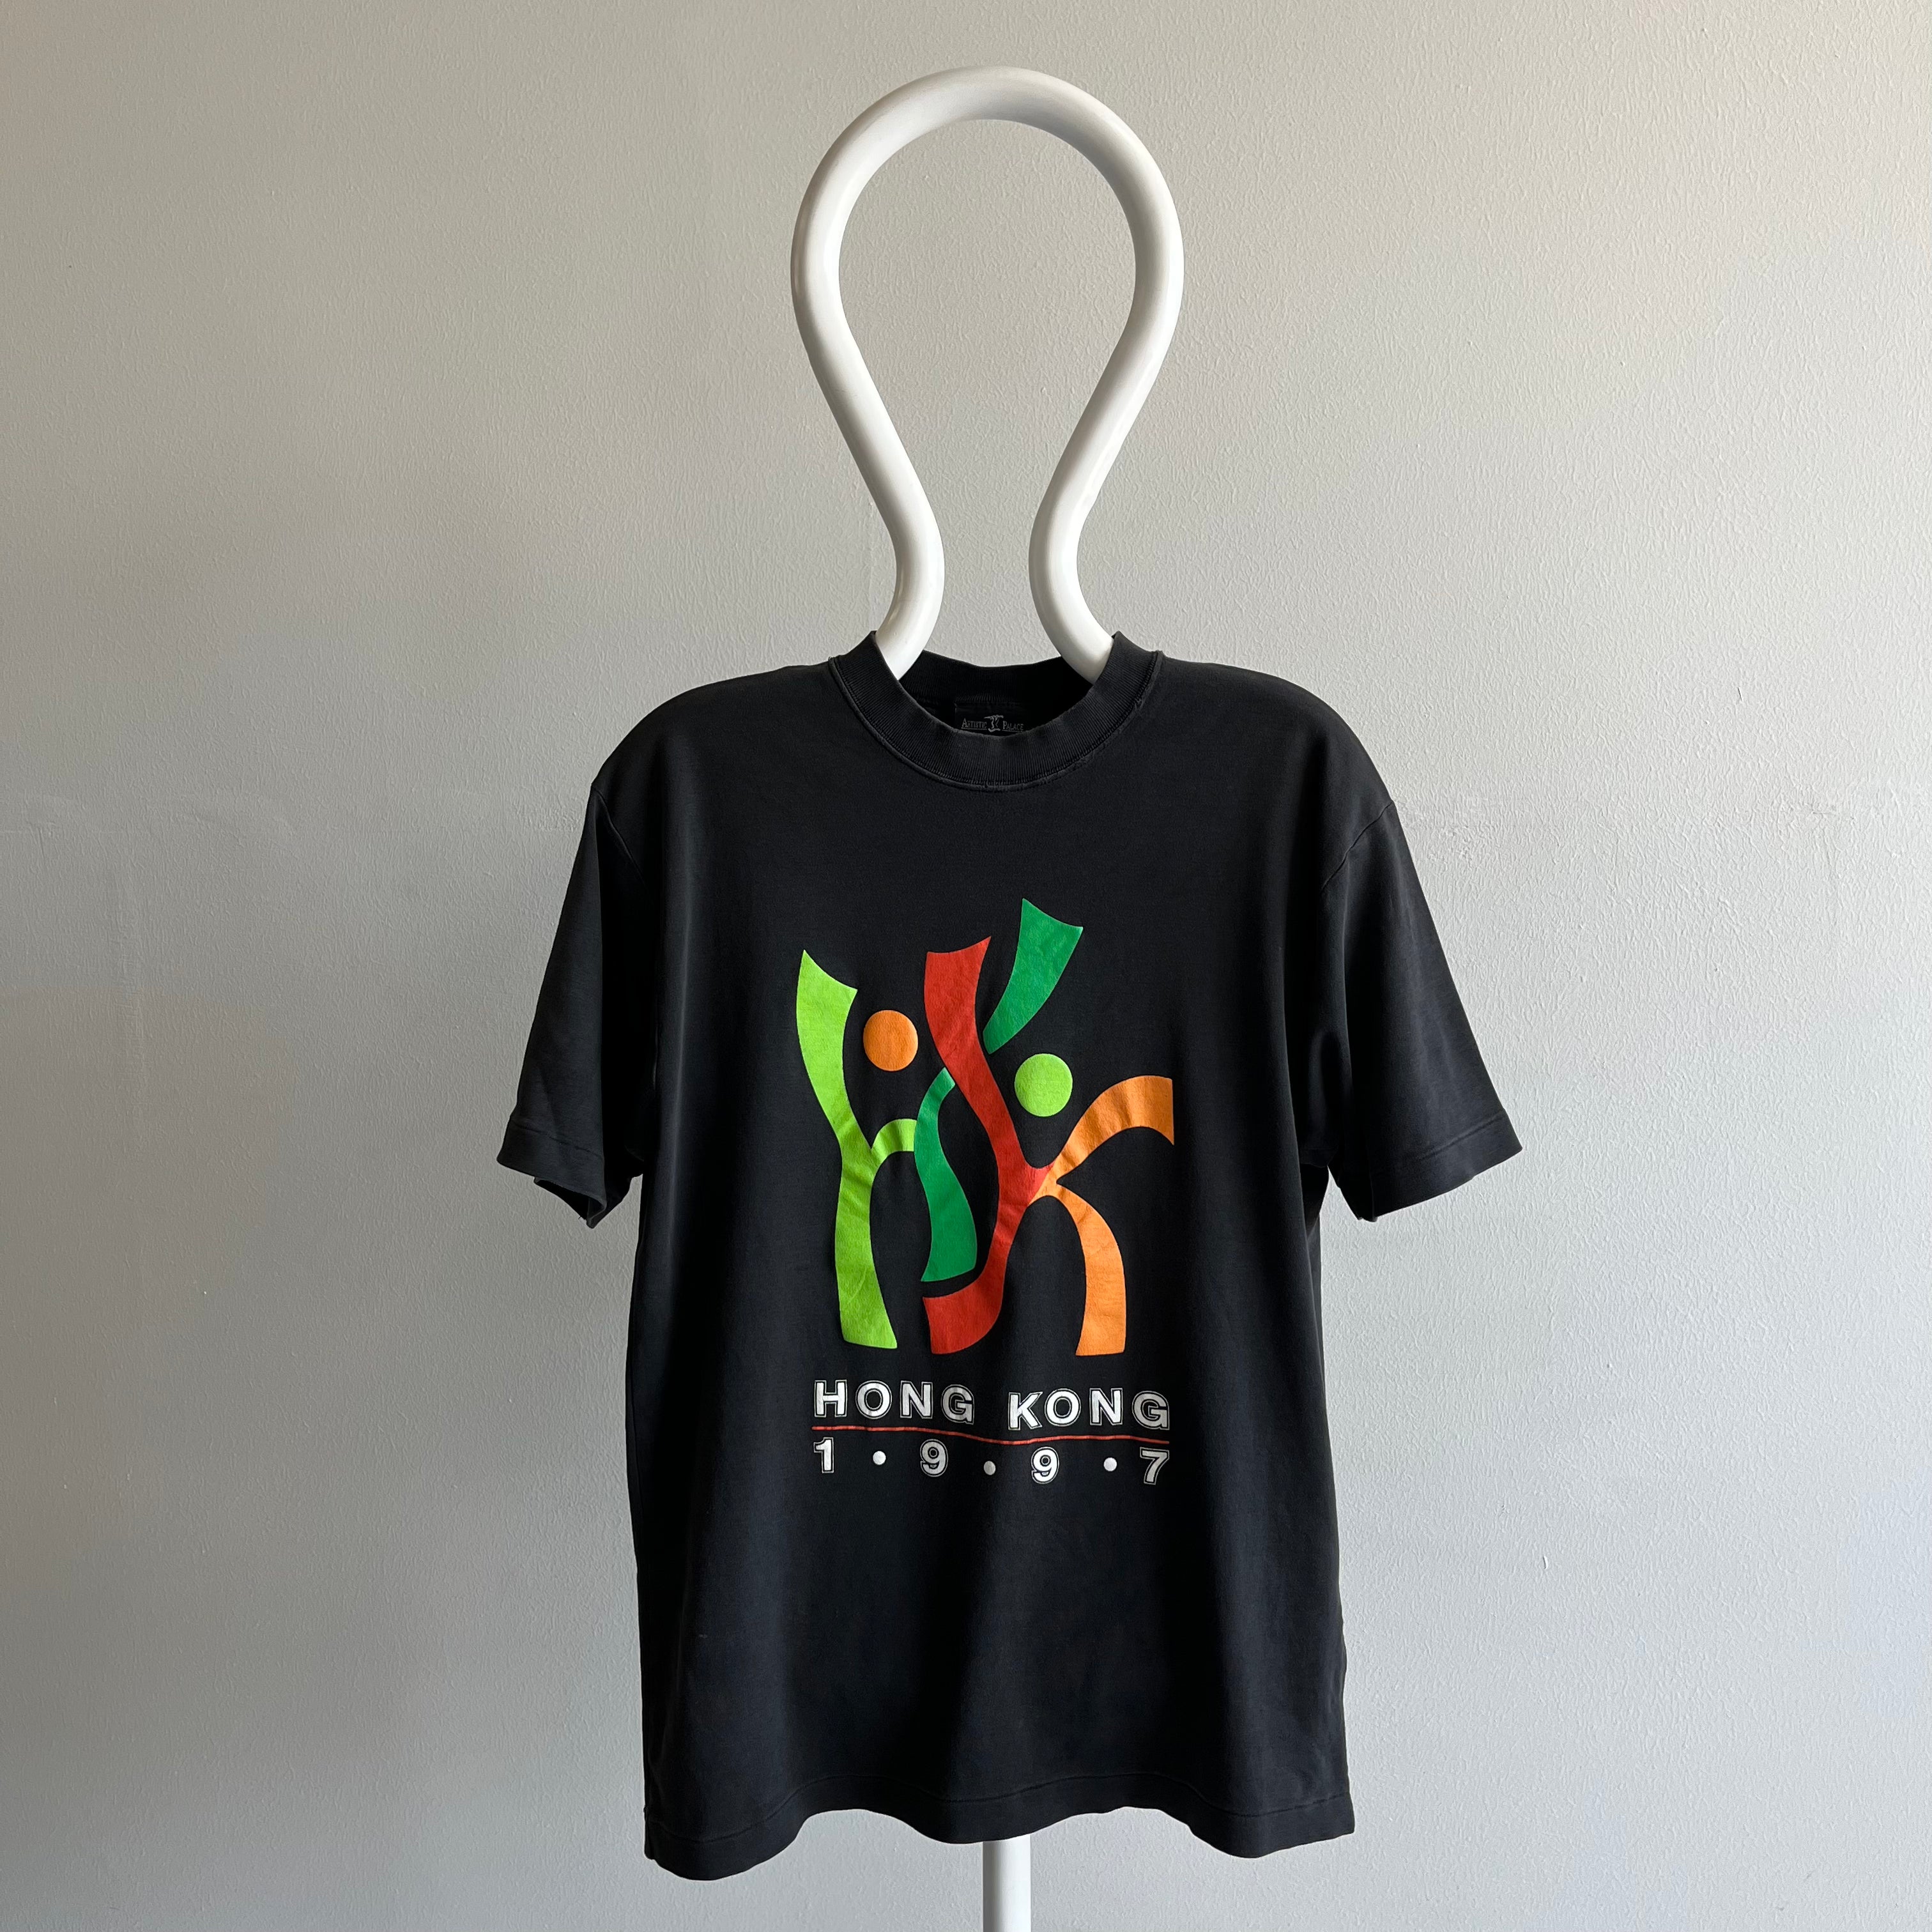 1997 Hong Kong T-Shirt